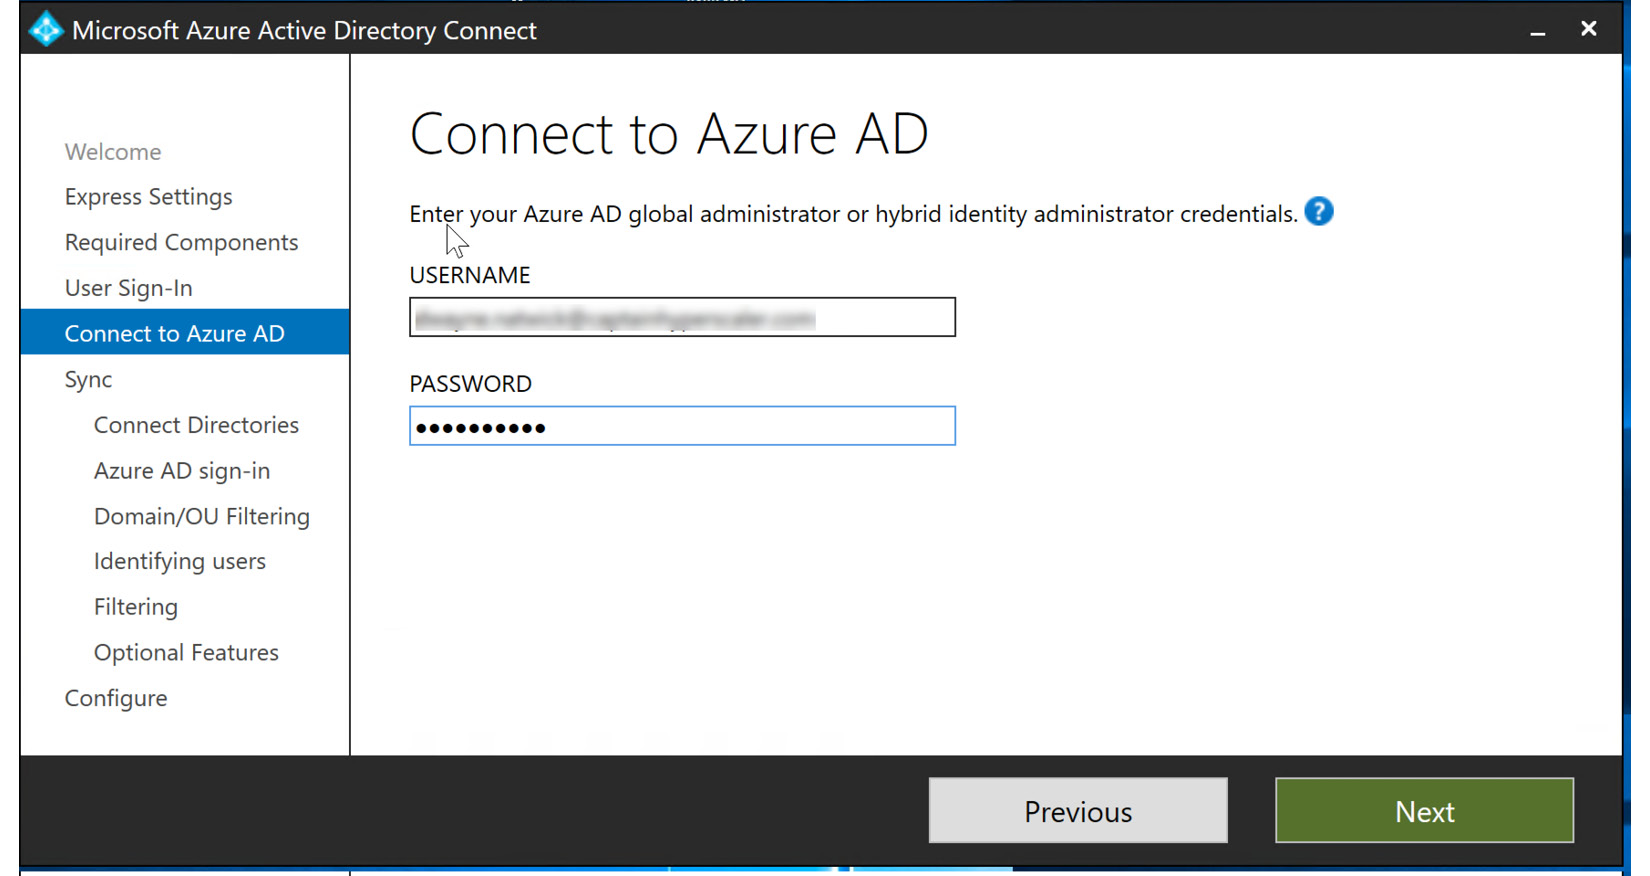 Figure 6.19 – Entering Azure AD global administrator credentials
